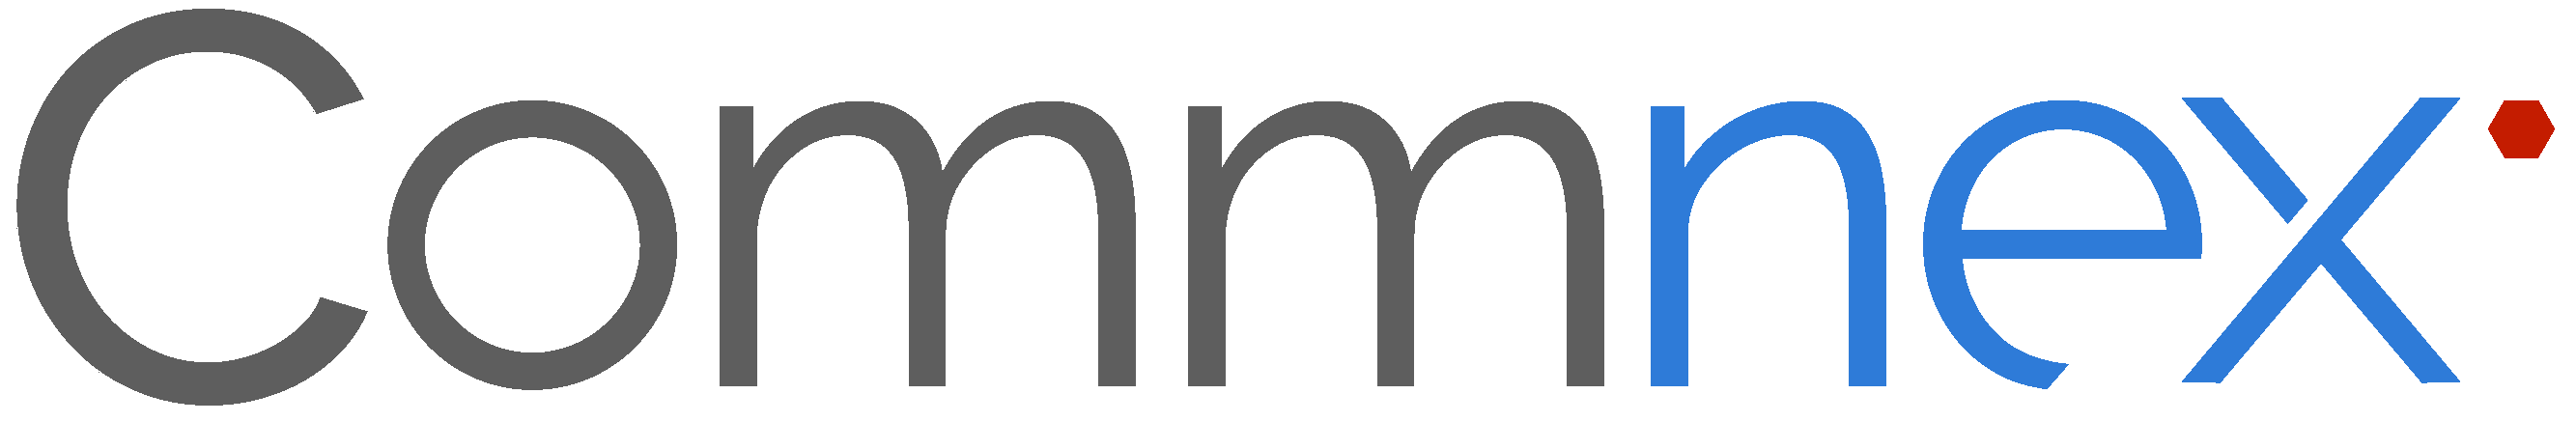 commnex logo